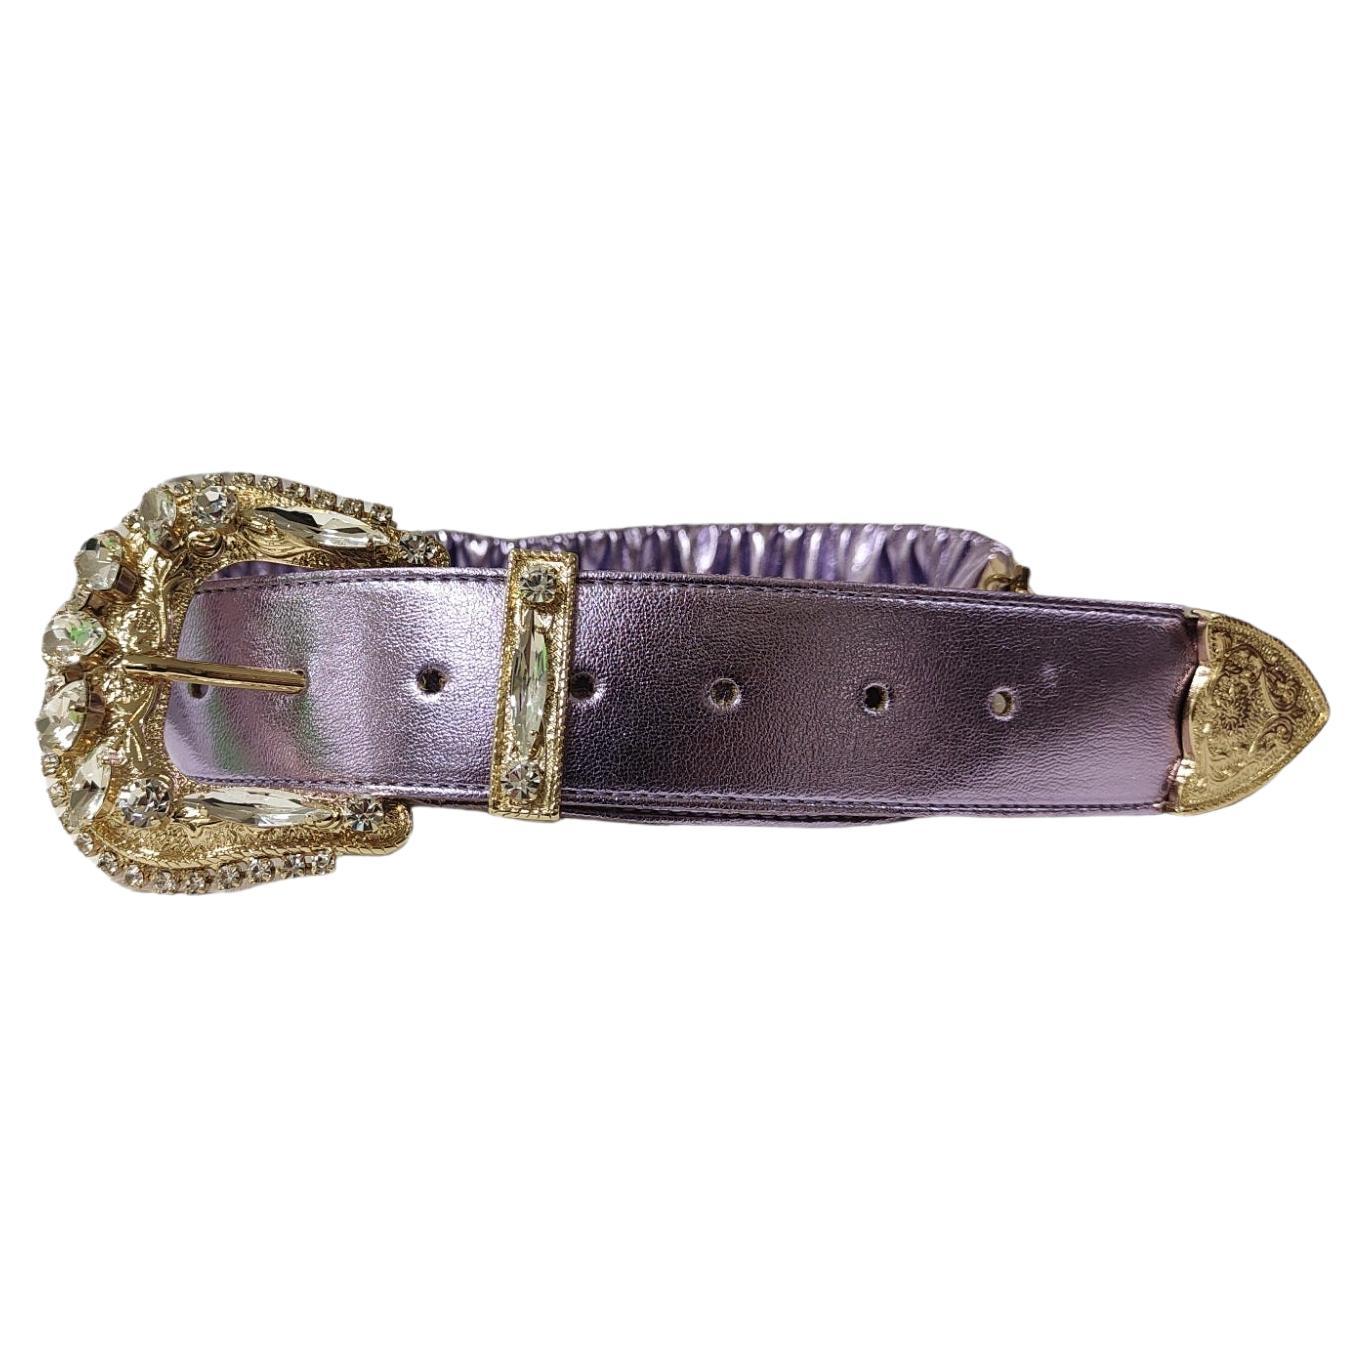 Metallic purple tone leather swarovski belt NWOT 